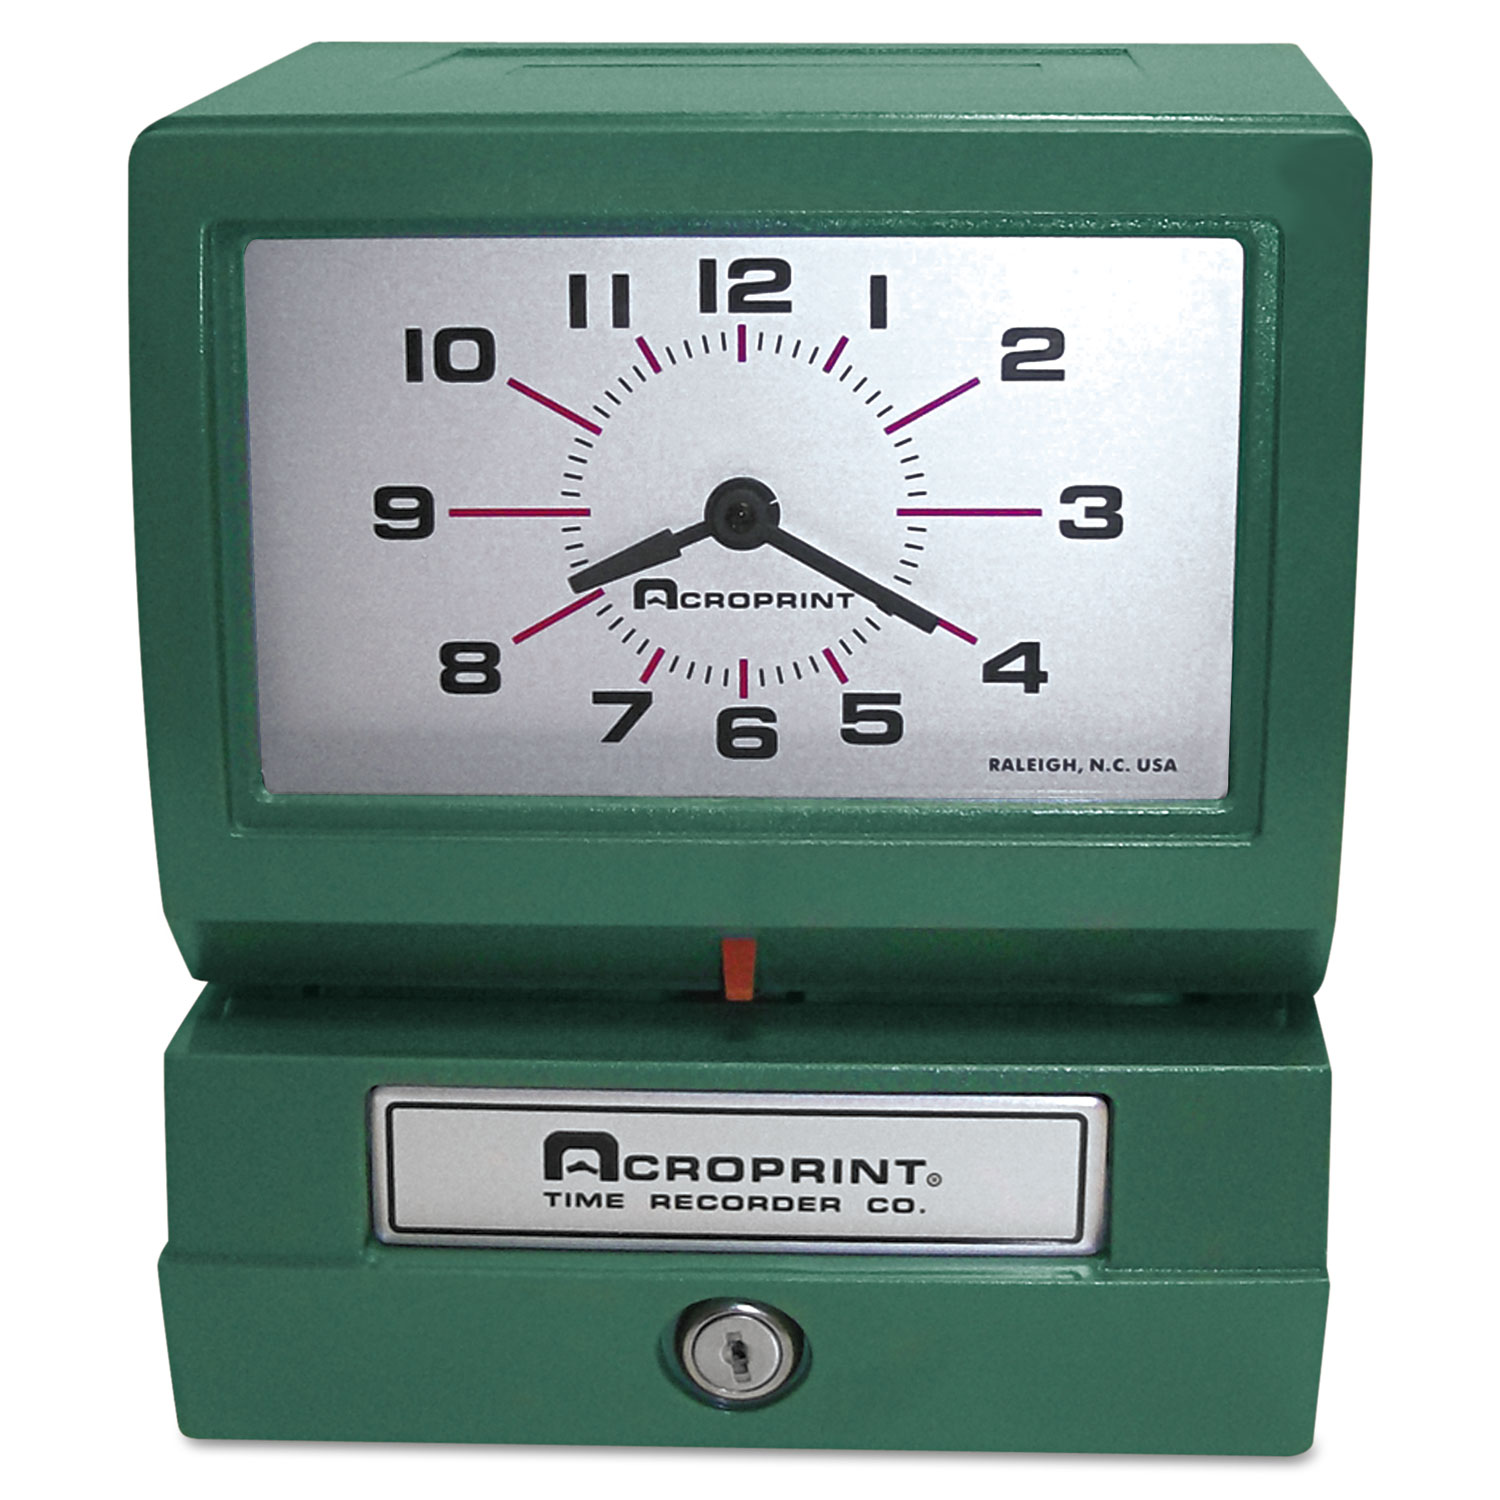 Model 150 Heavy-Duty Analog Automatic Print Time Clock